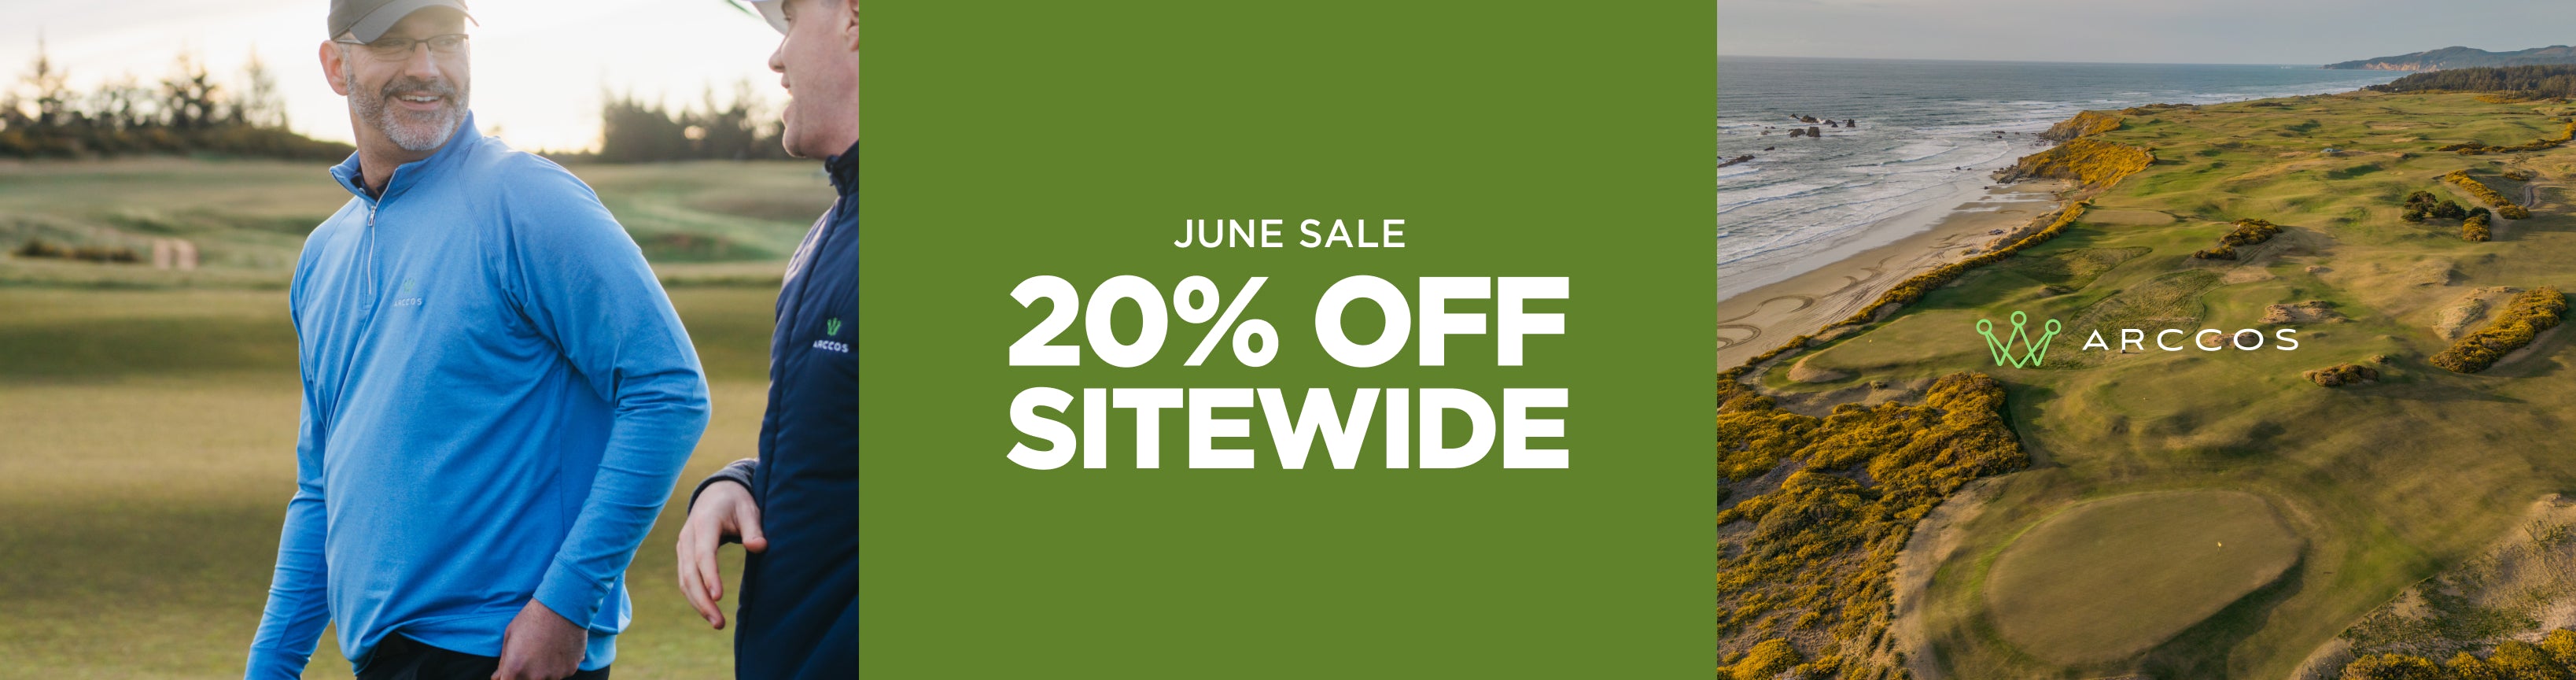 June Sale: Save 20% at Arccos